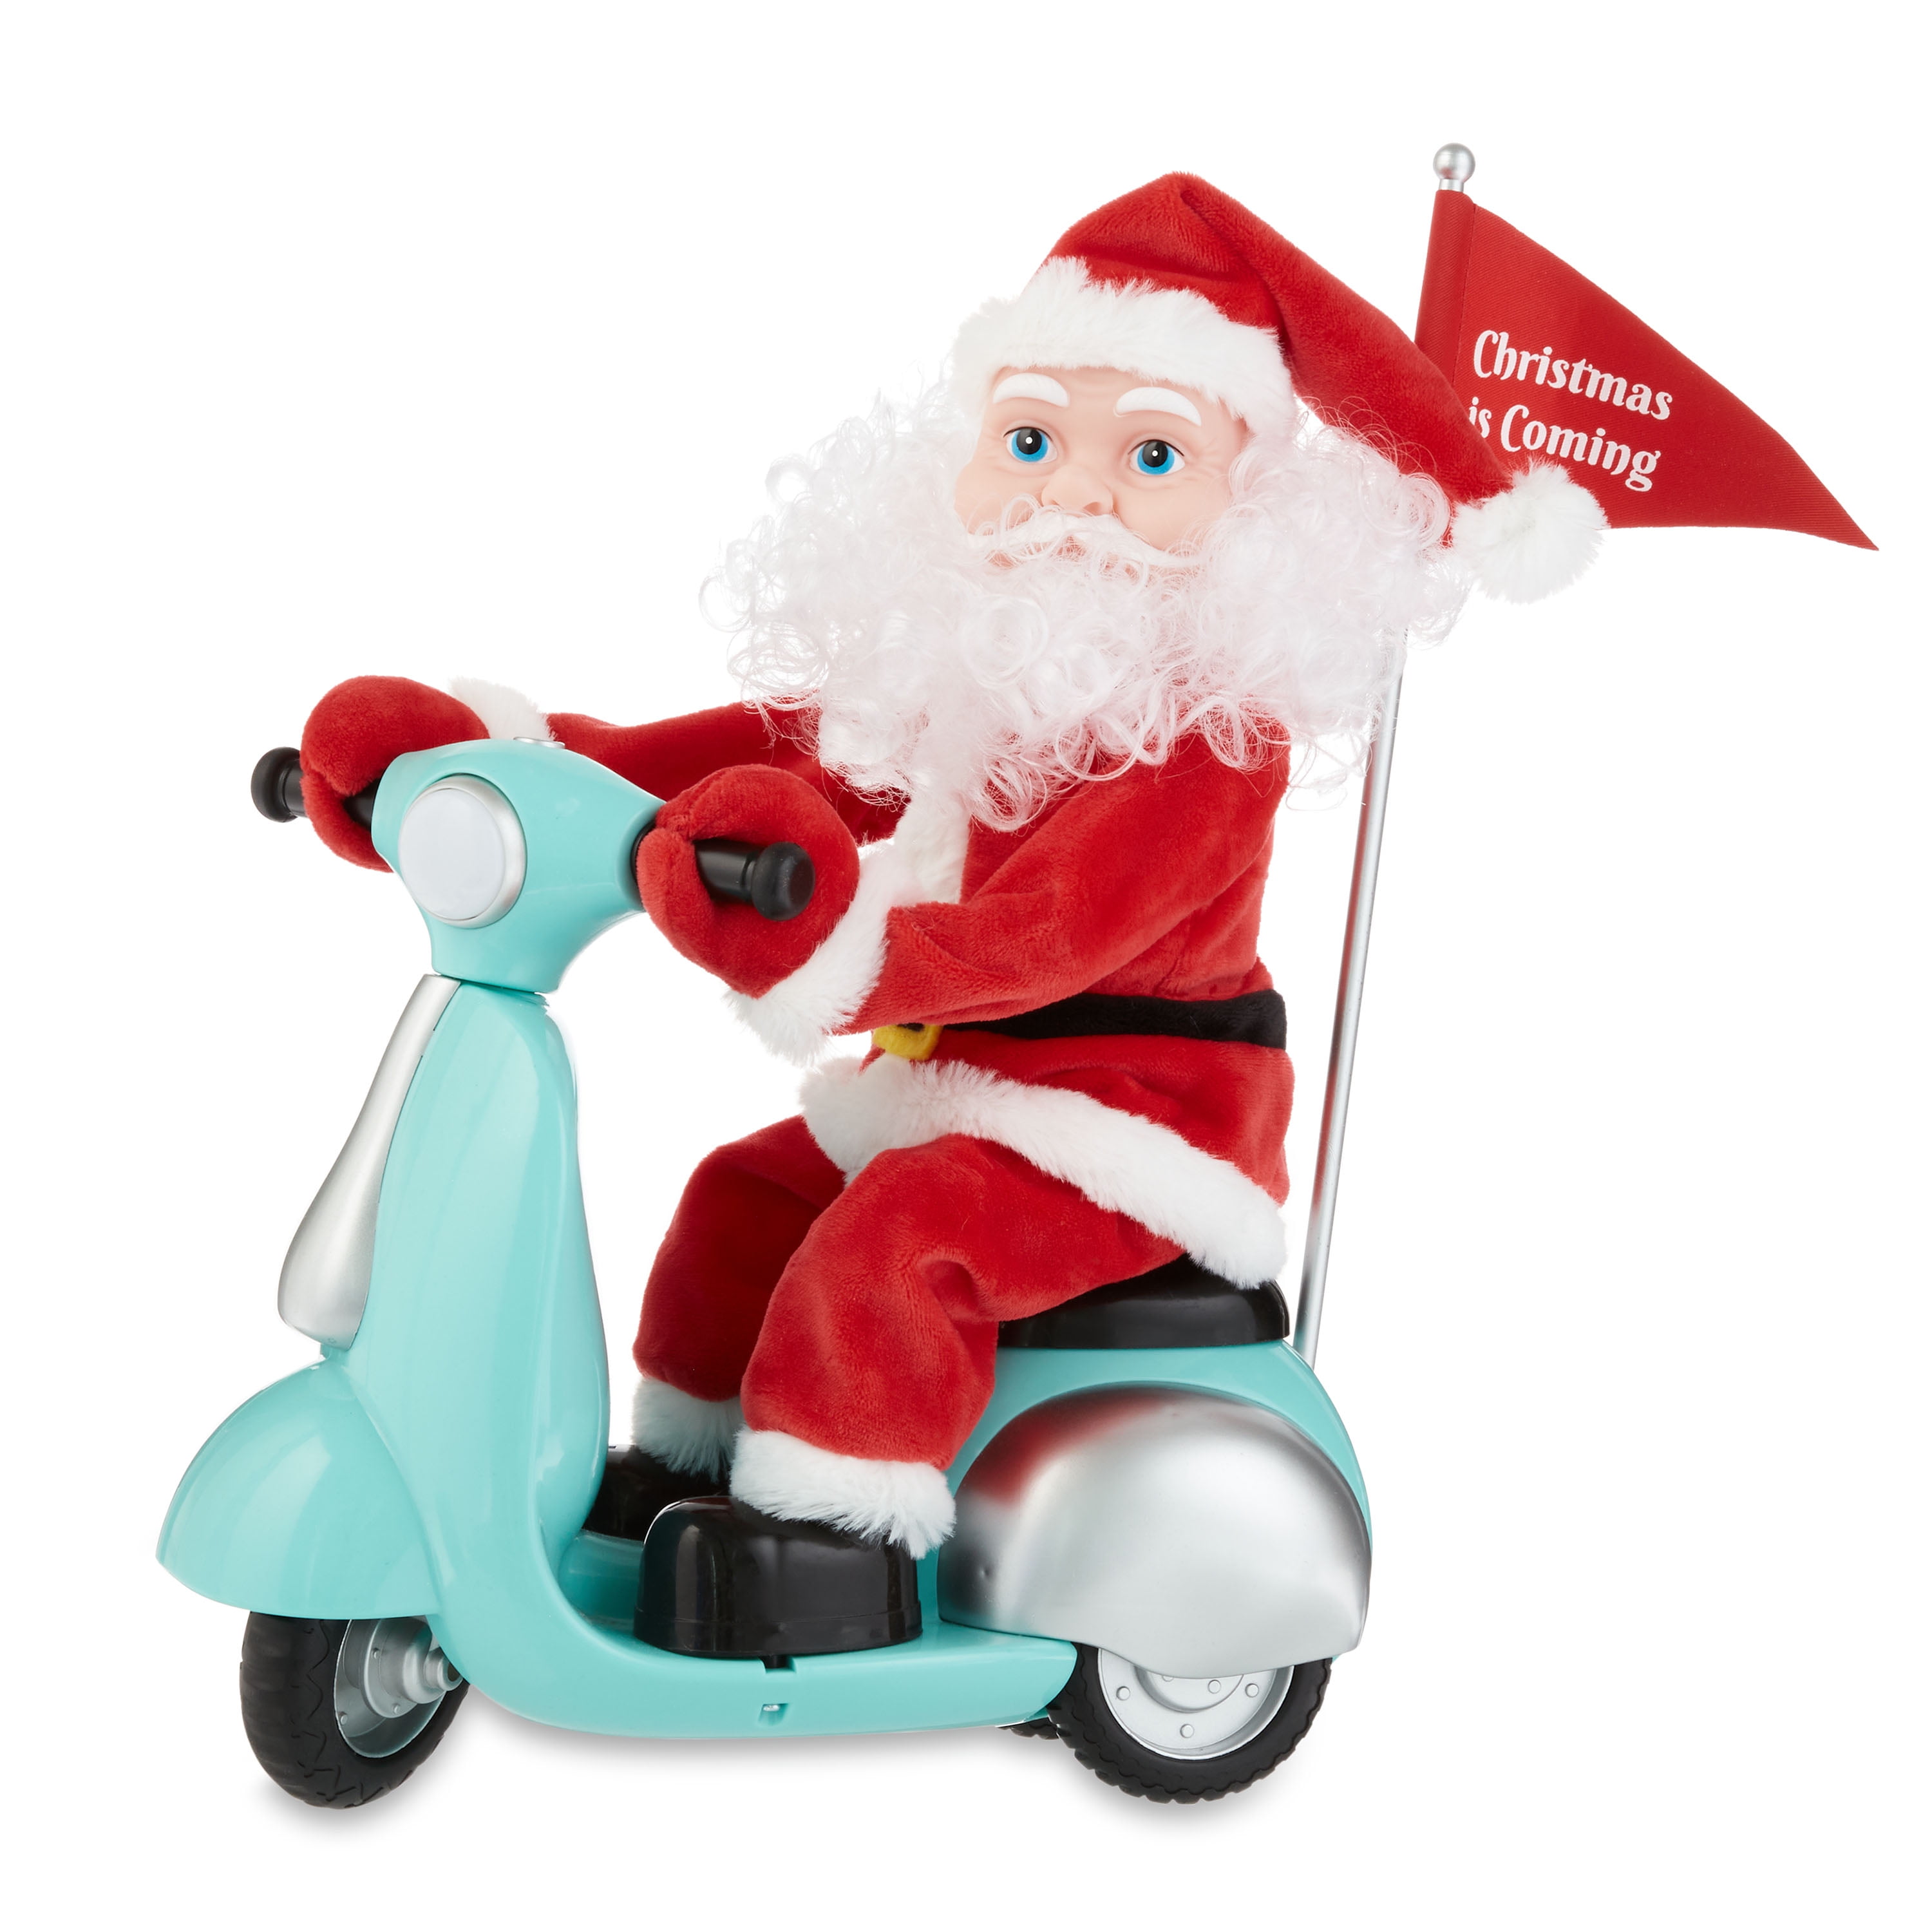 Mr. Animated Scooting Santa Decoration, Turquoise -